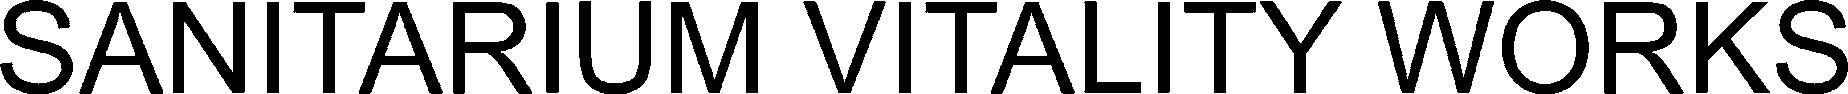 Trademark Logo SANITARIUM VITALITY WORKS